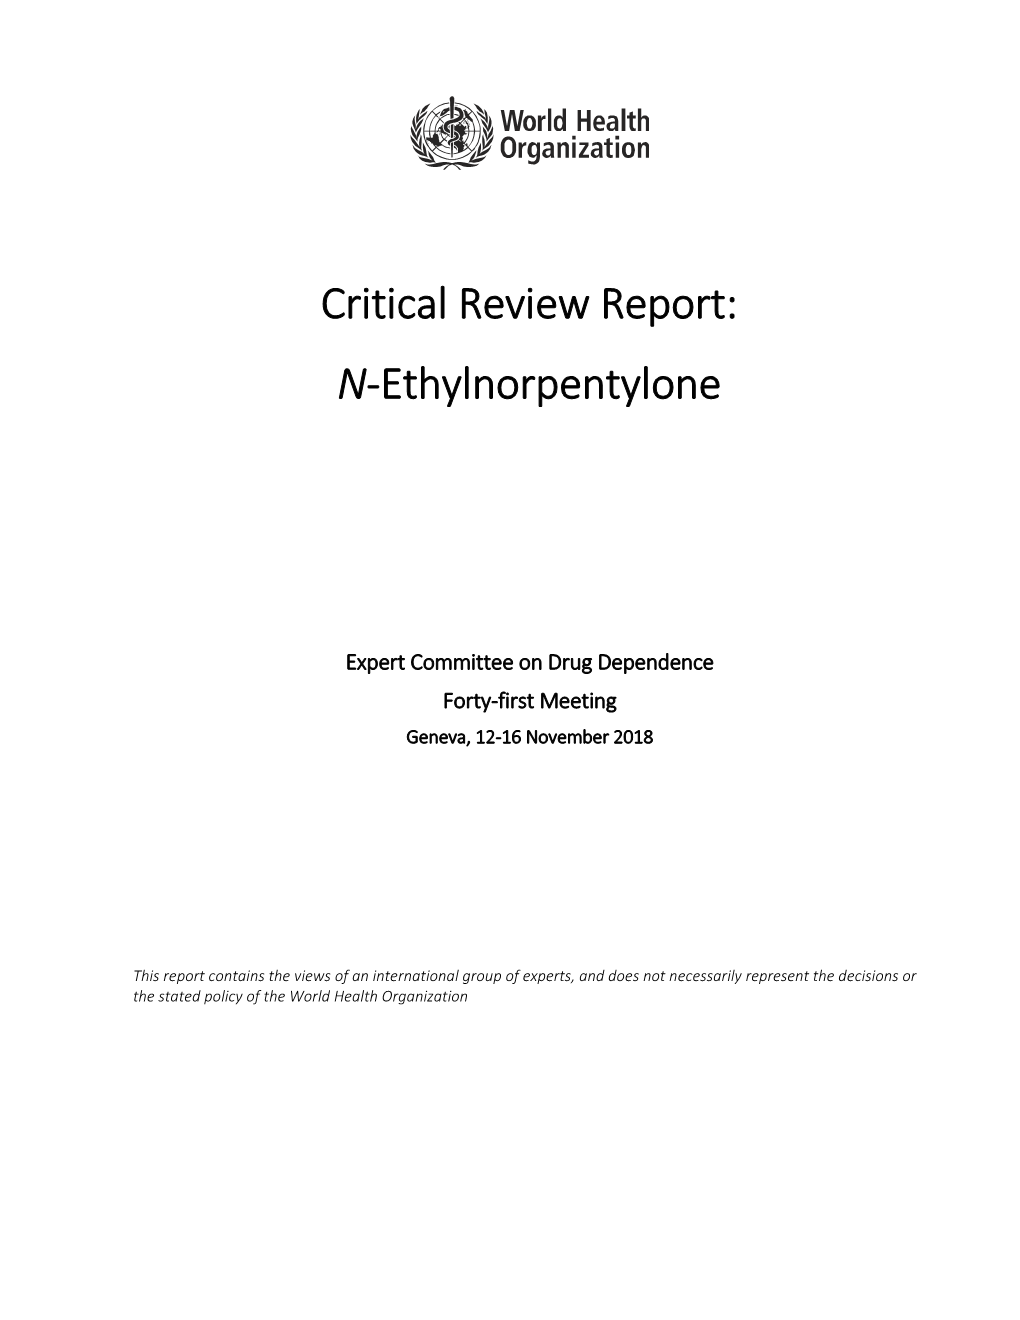 Critical Review Report: N-Ethylnorpentylone